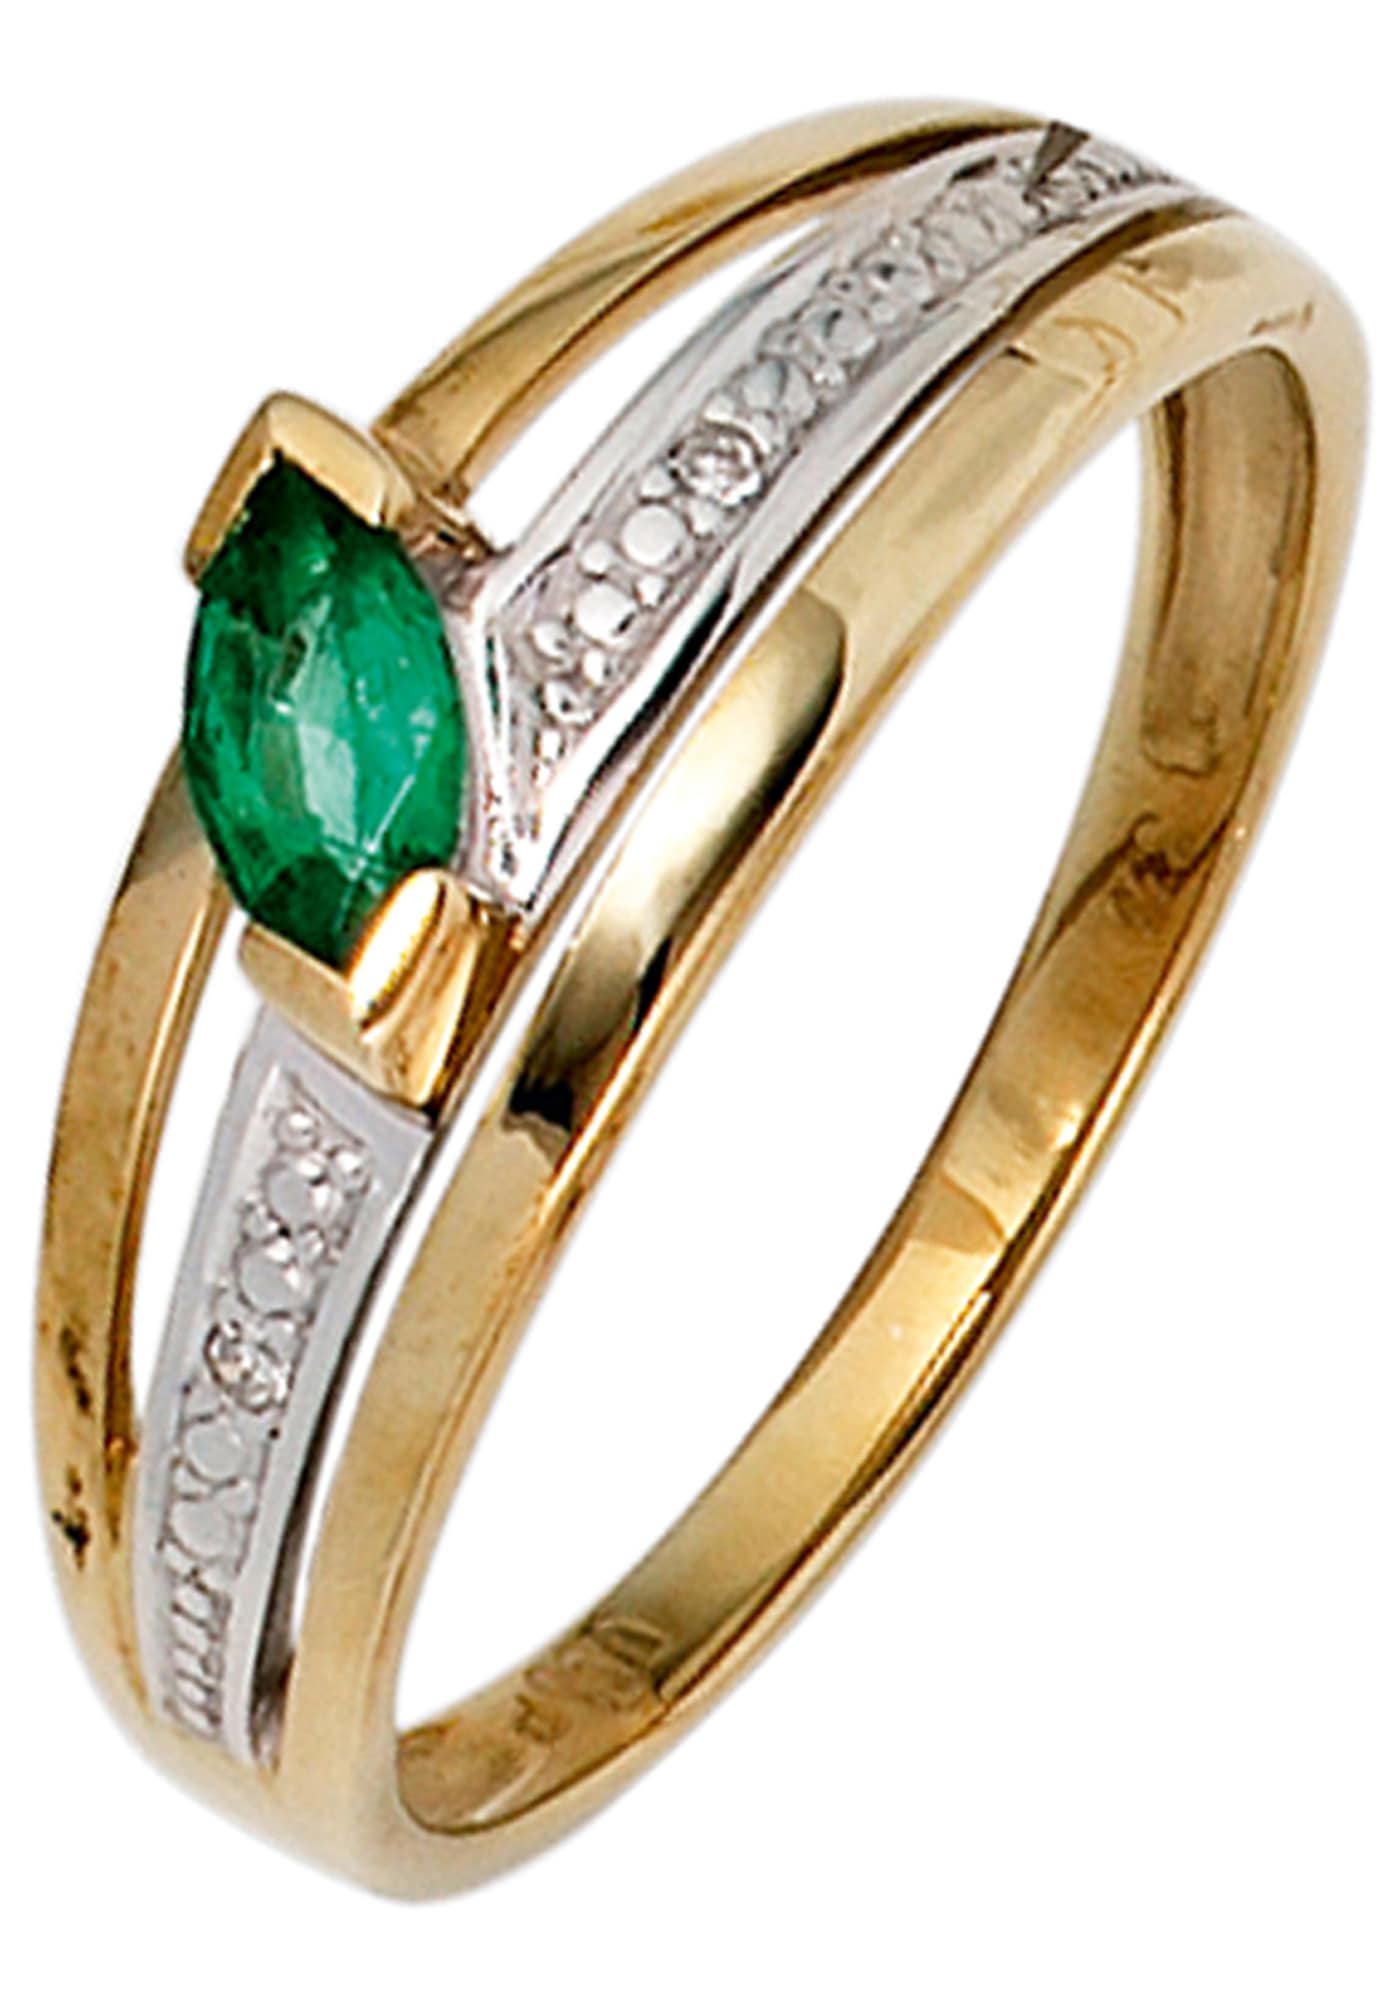 Gold bicolor Smaragd 585 2 Diamantring mit JOBO Diamanten und